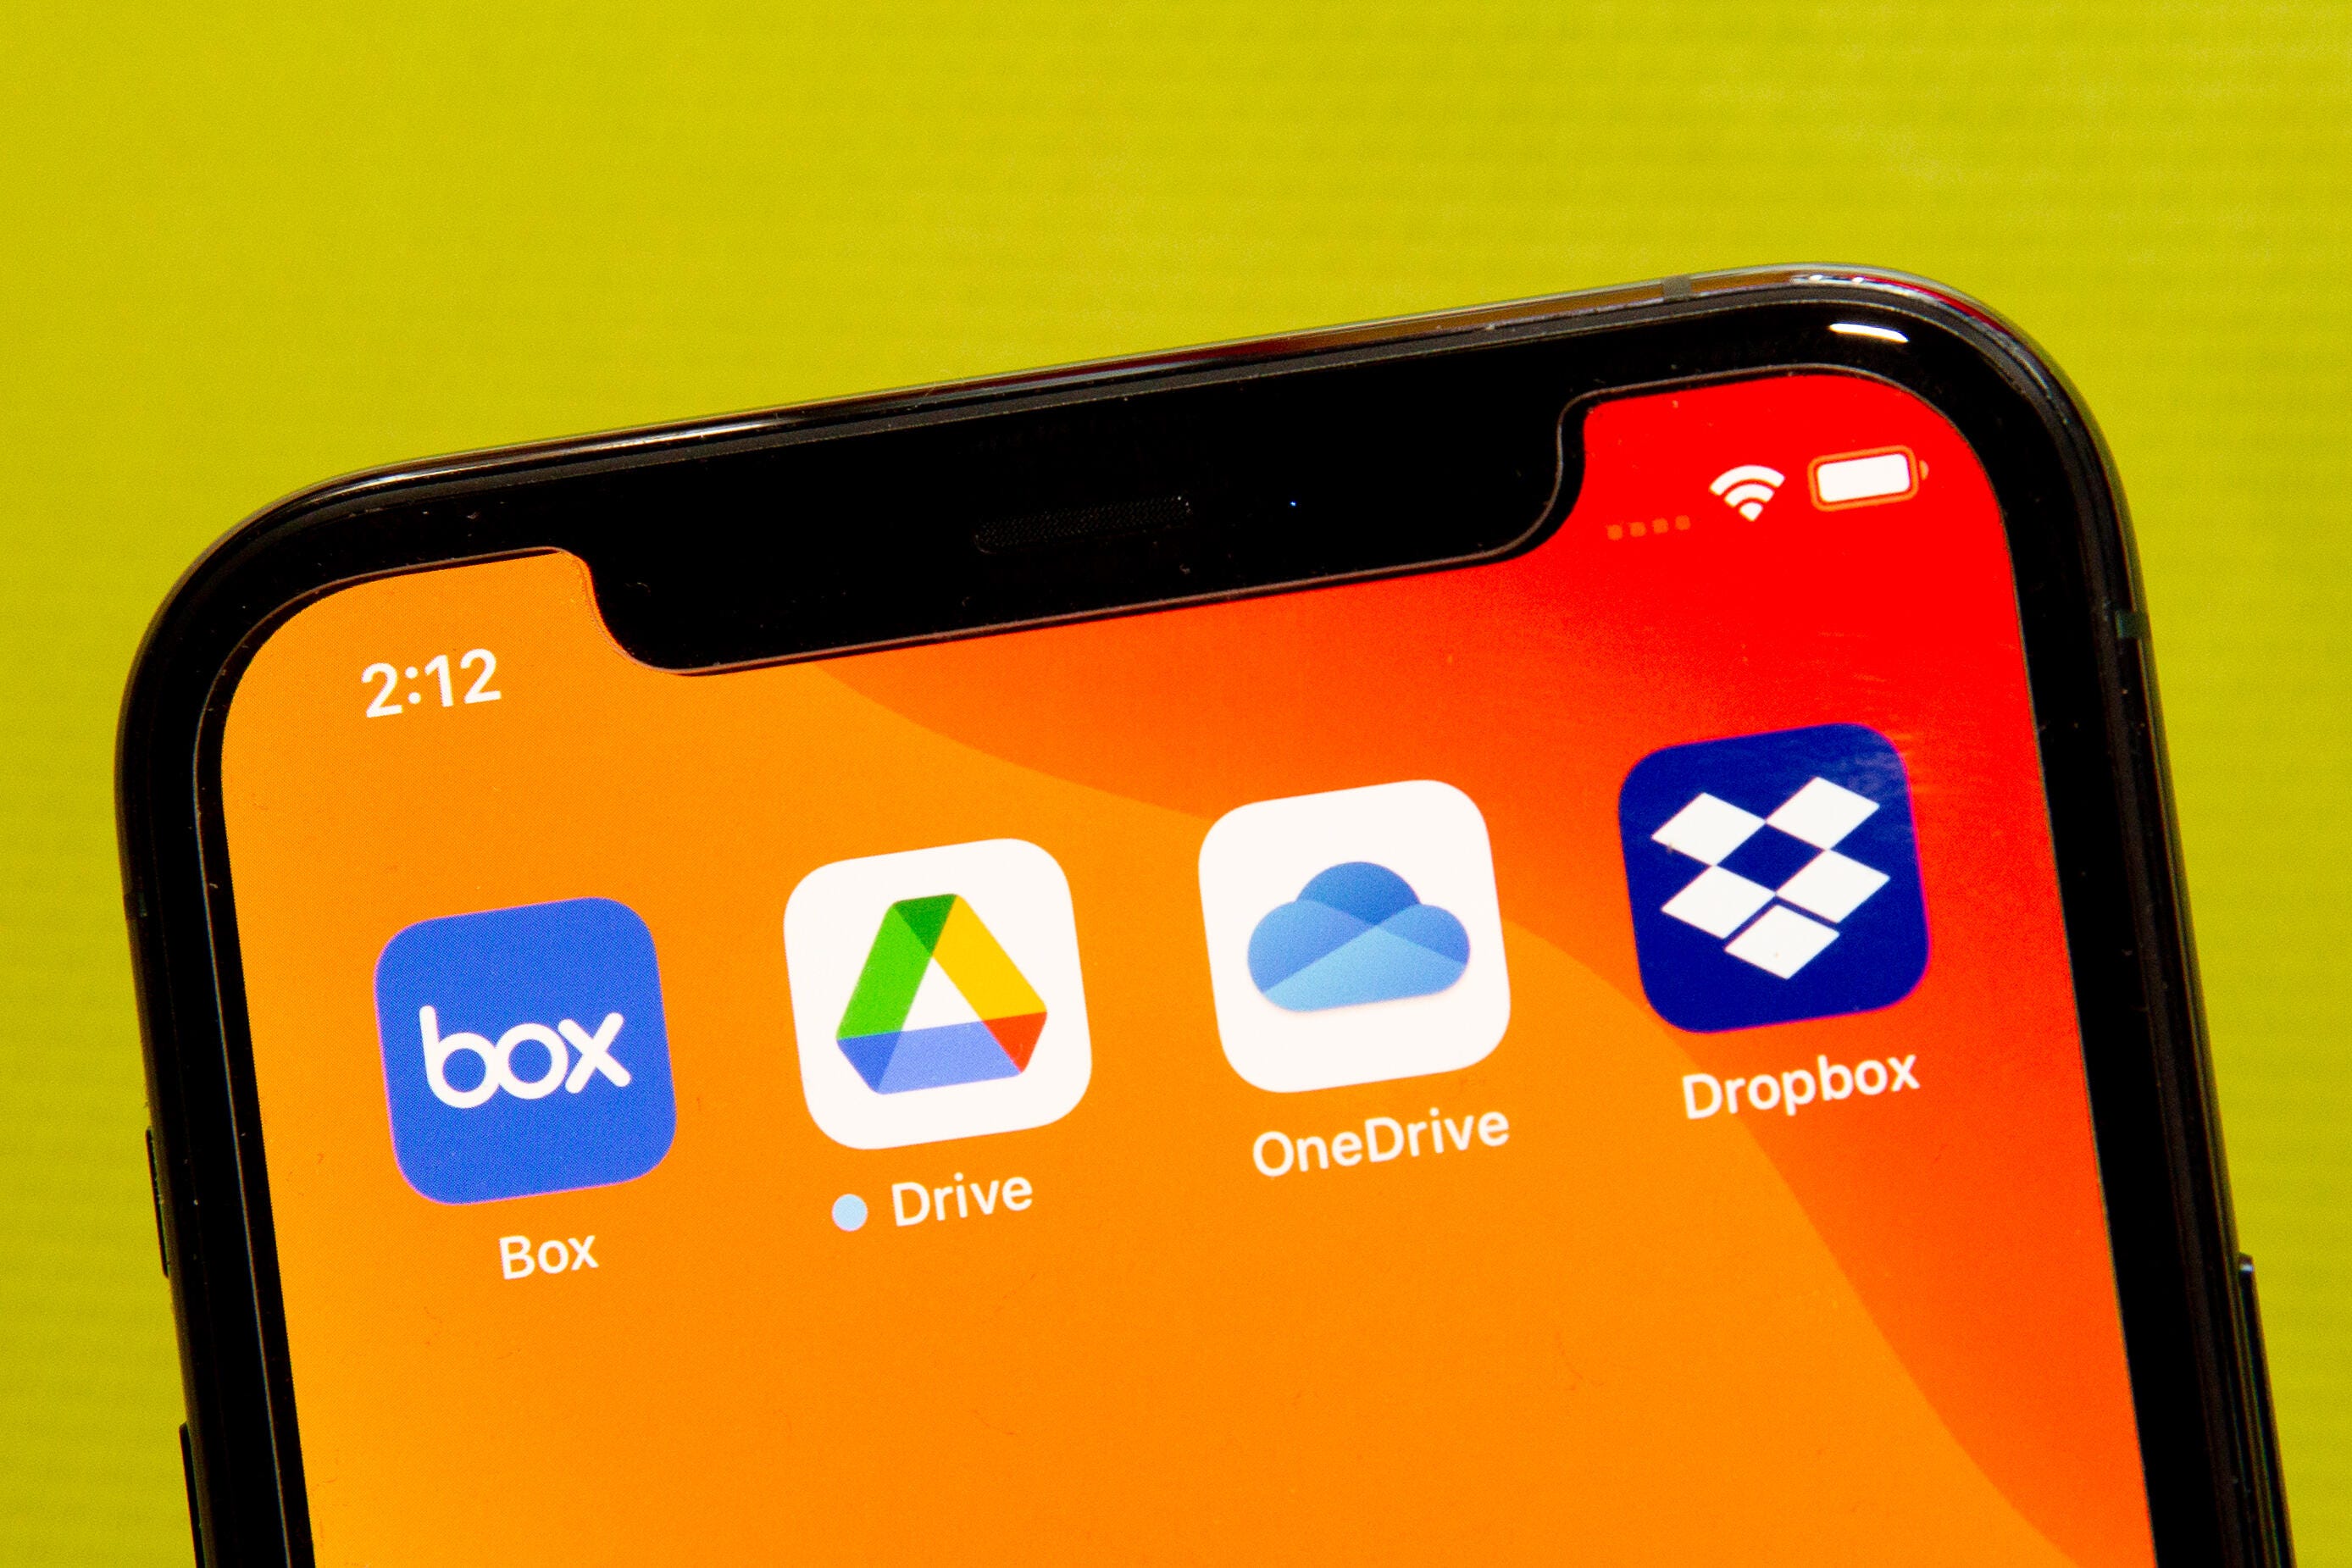 004-box-google-drive-onedrive-dropbox-cloud-storage-apps-cnet-2021